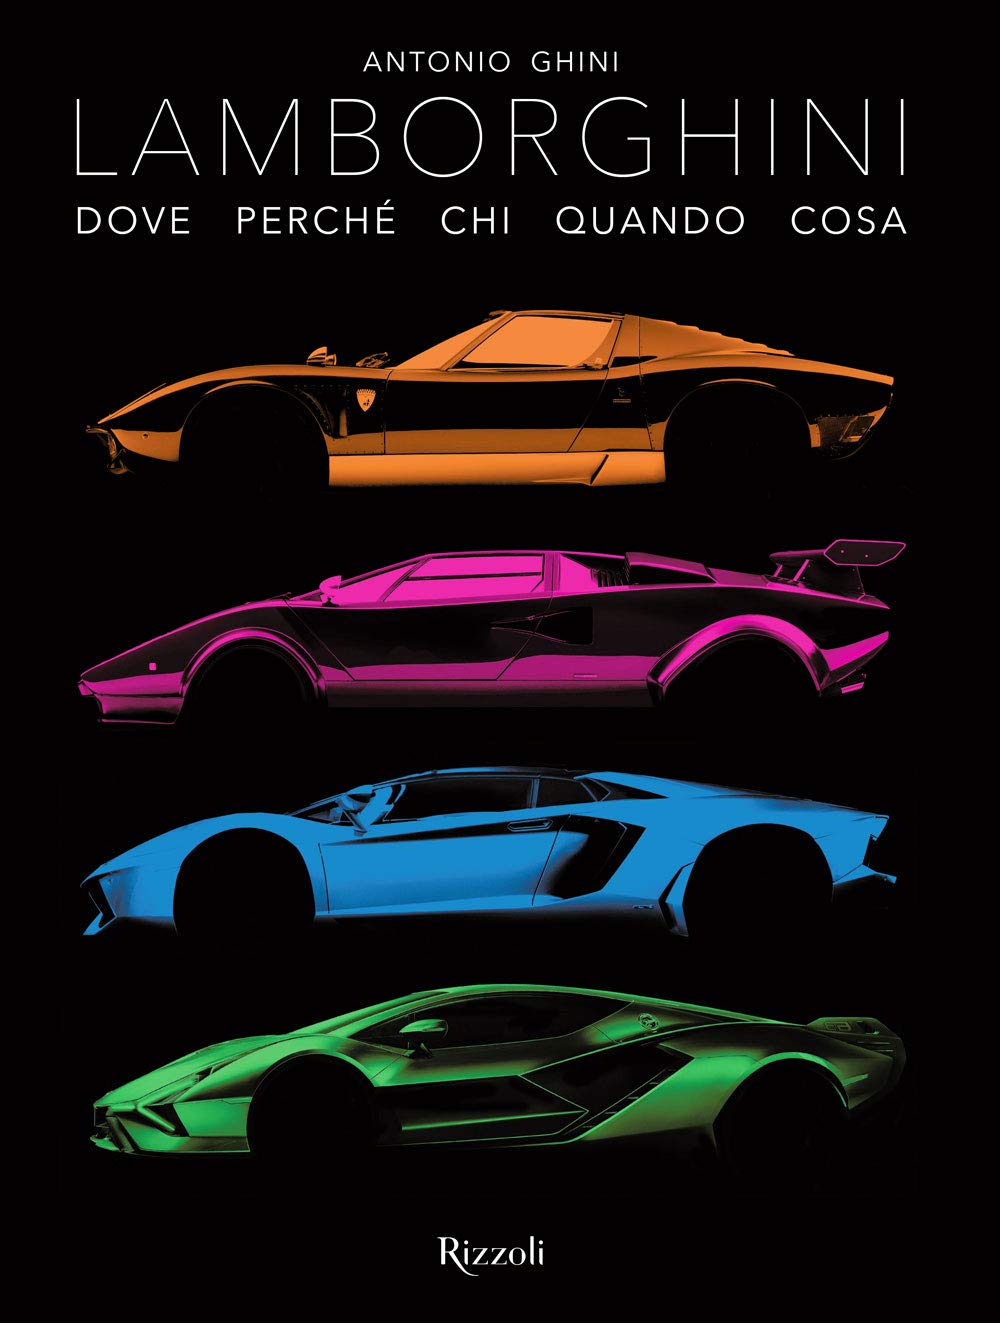 Lamborghini: Where Why Who When What - Autobooks-Aerobooks